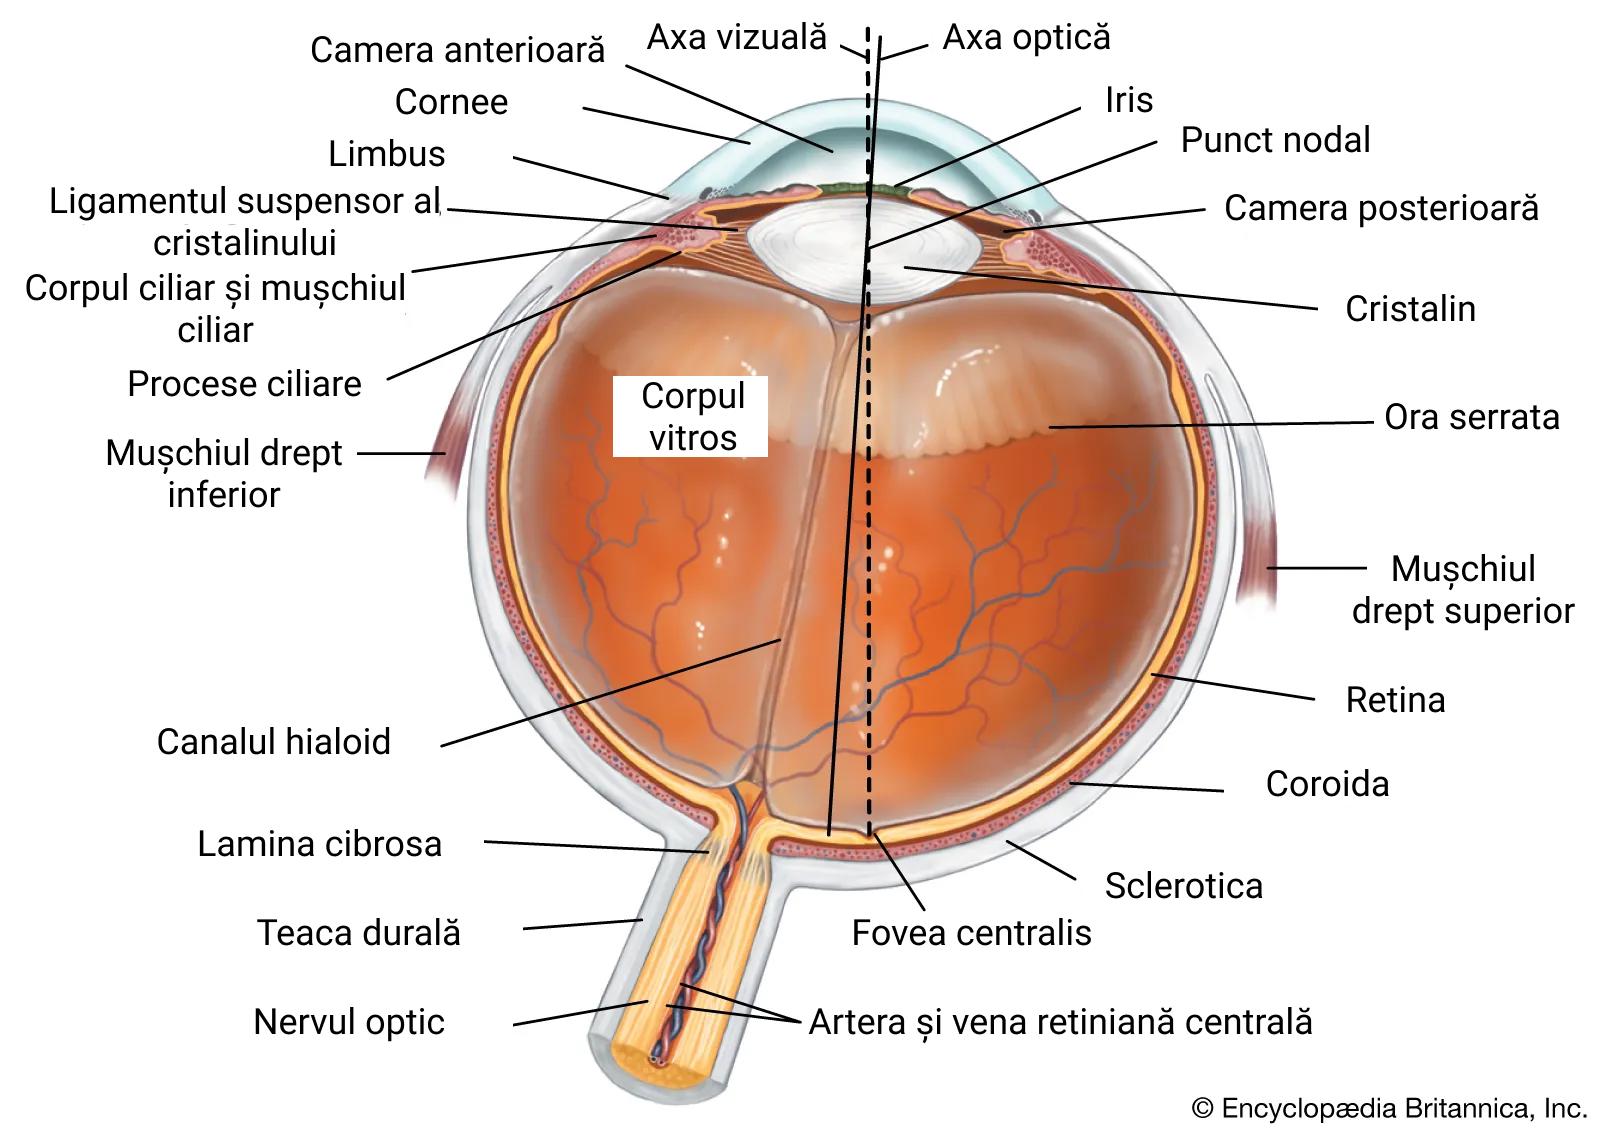 Anatomia ochiului uman.